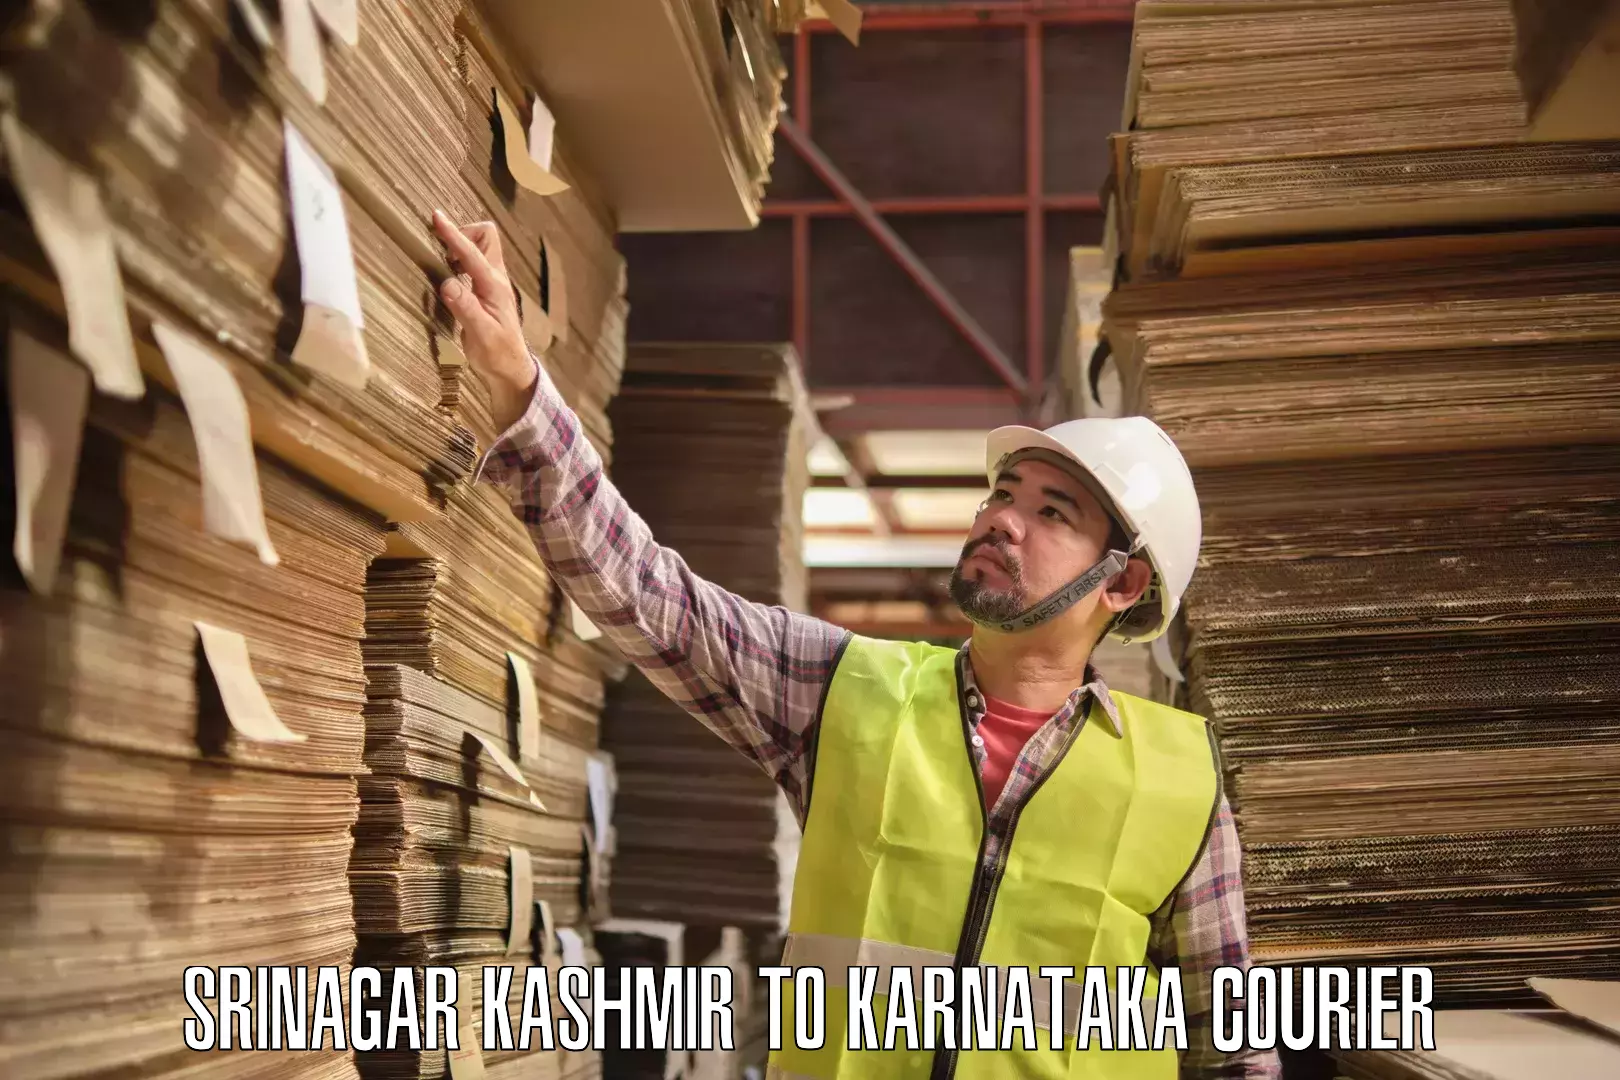 Versatile courier offerings Srinagar Kashmir to Karnataka